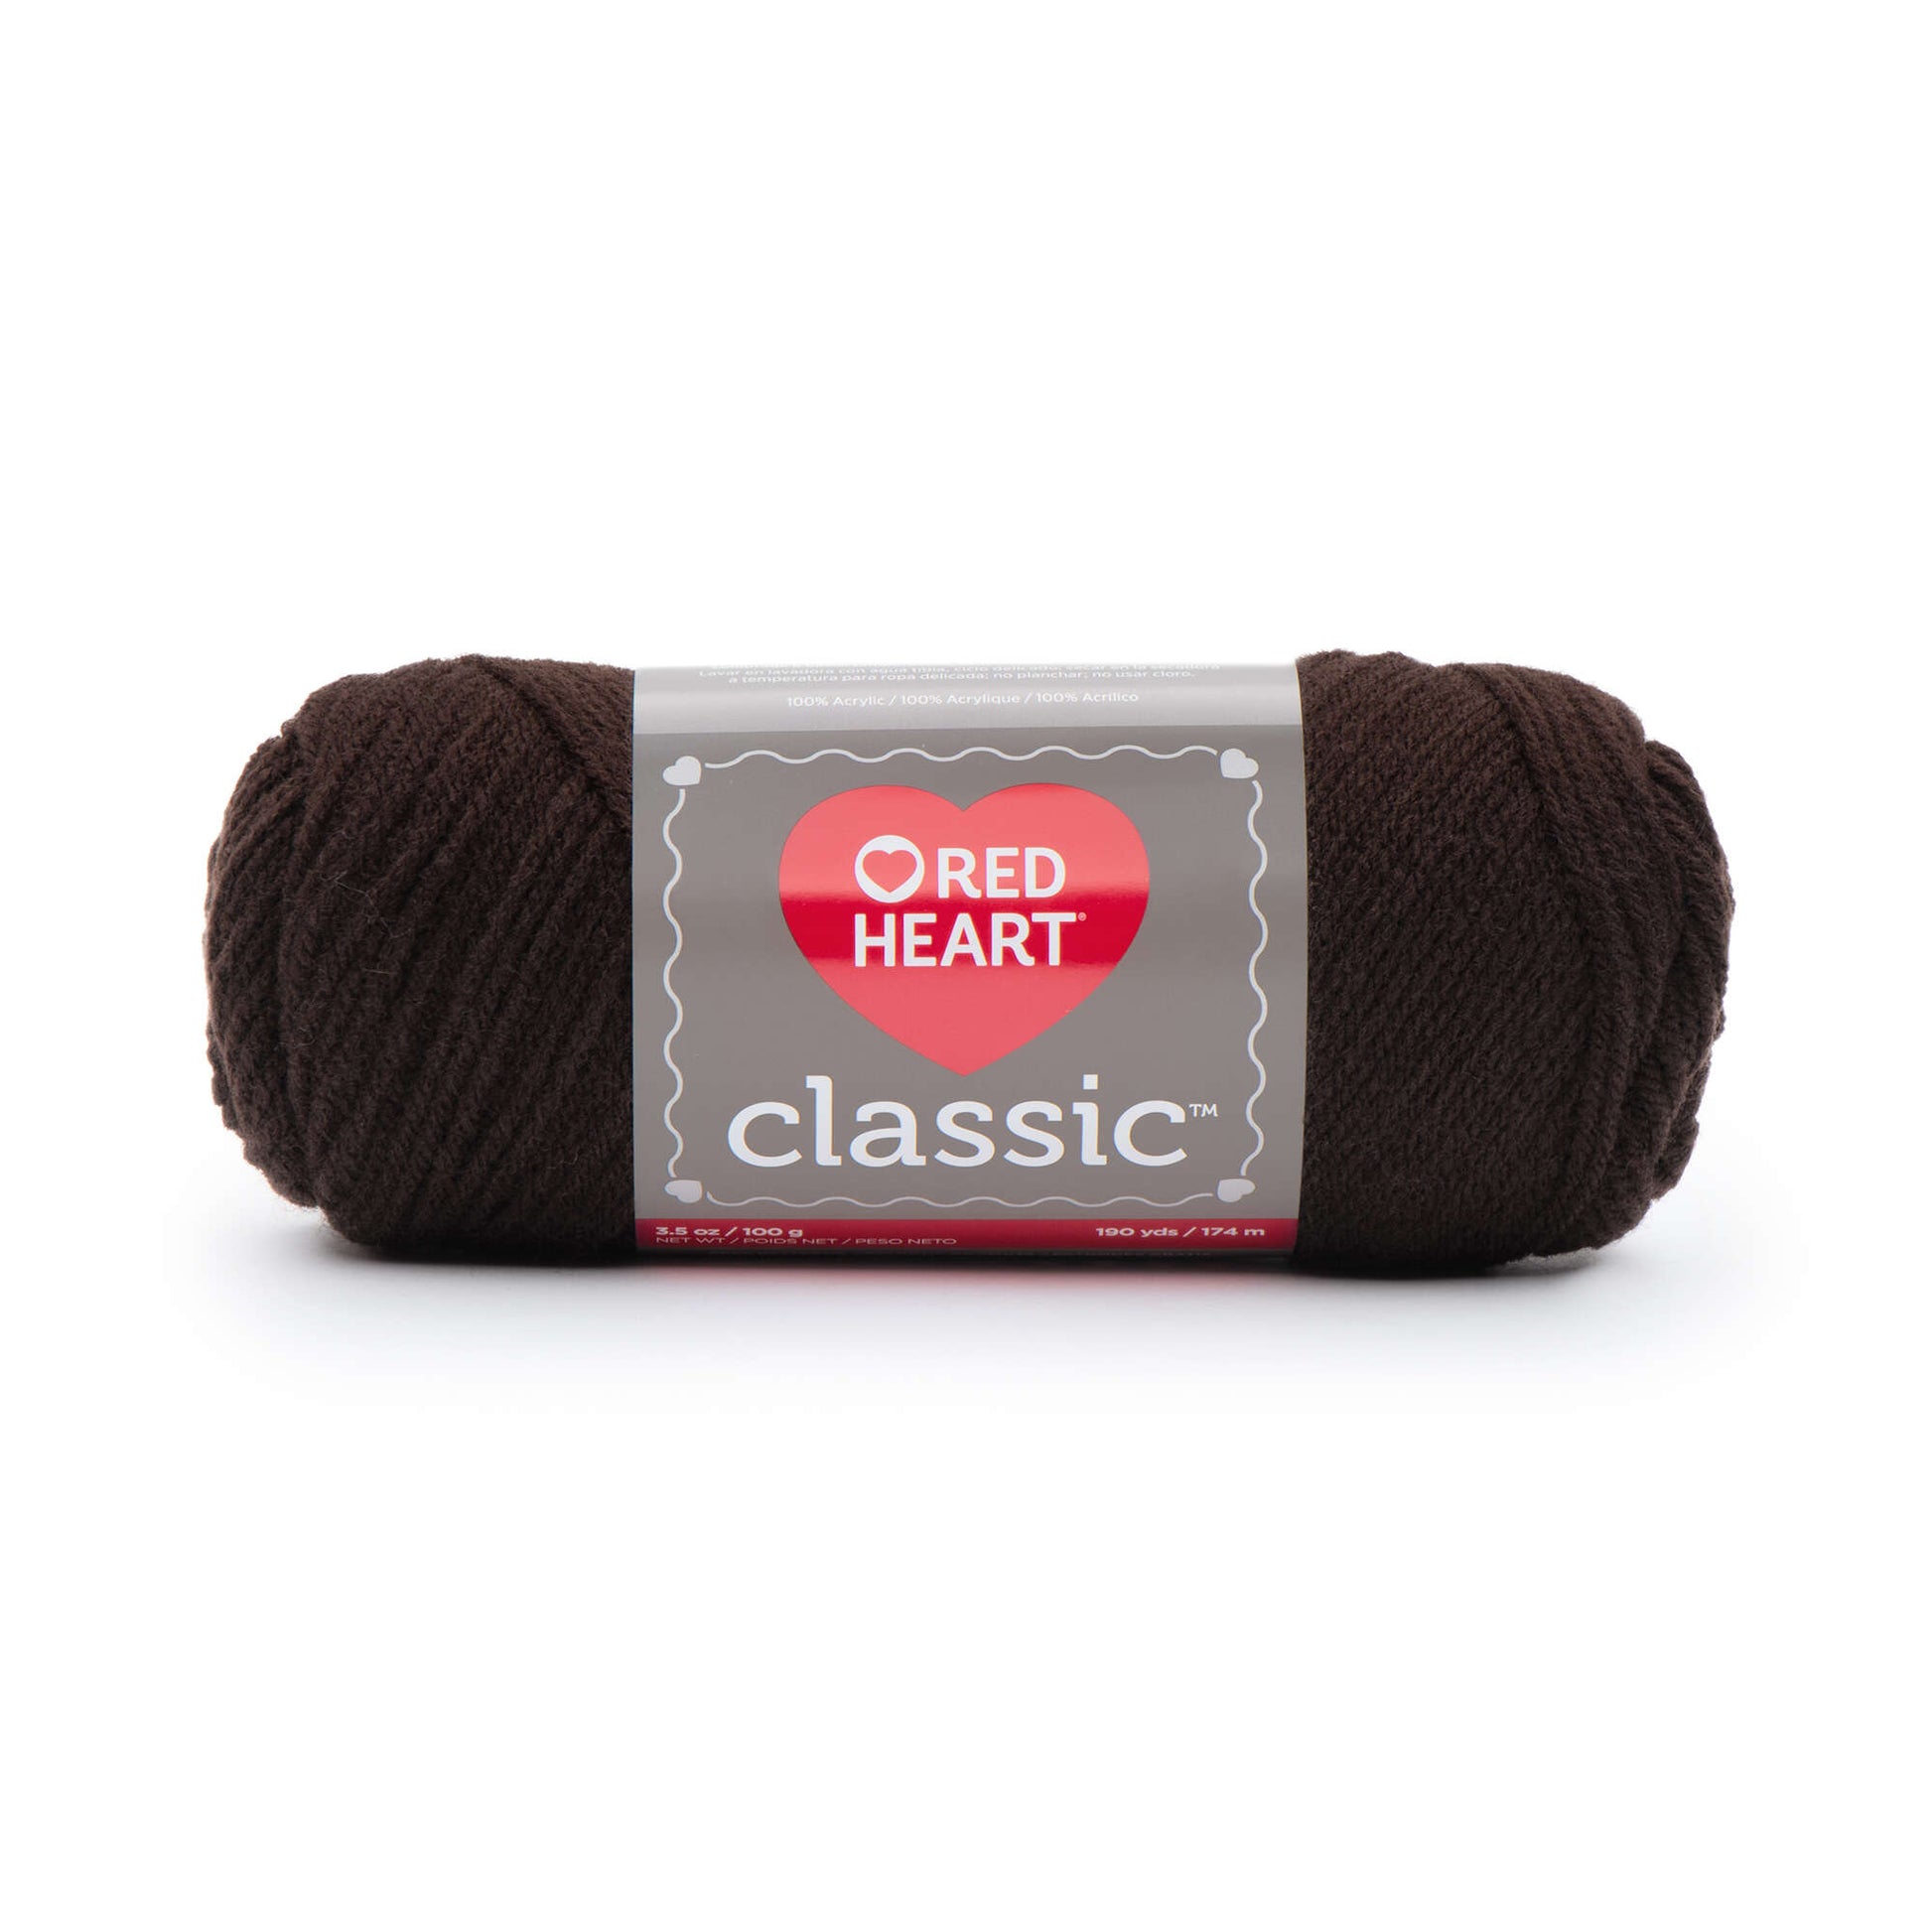 Red Heart Classic Yarn - Clearance shades Coffee